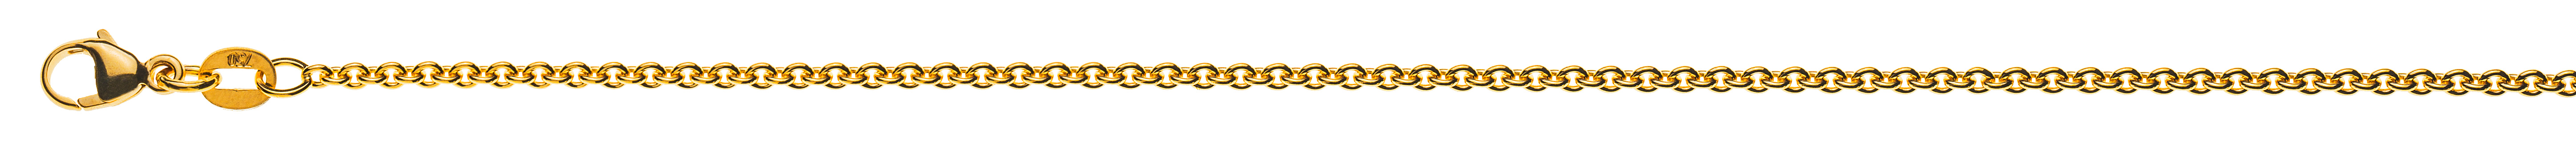 AURONOS Prestige Necklace Yellow Gold 18K Round Anchor 50cm 1.9mm